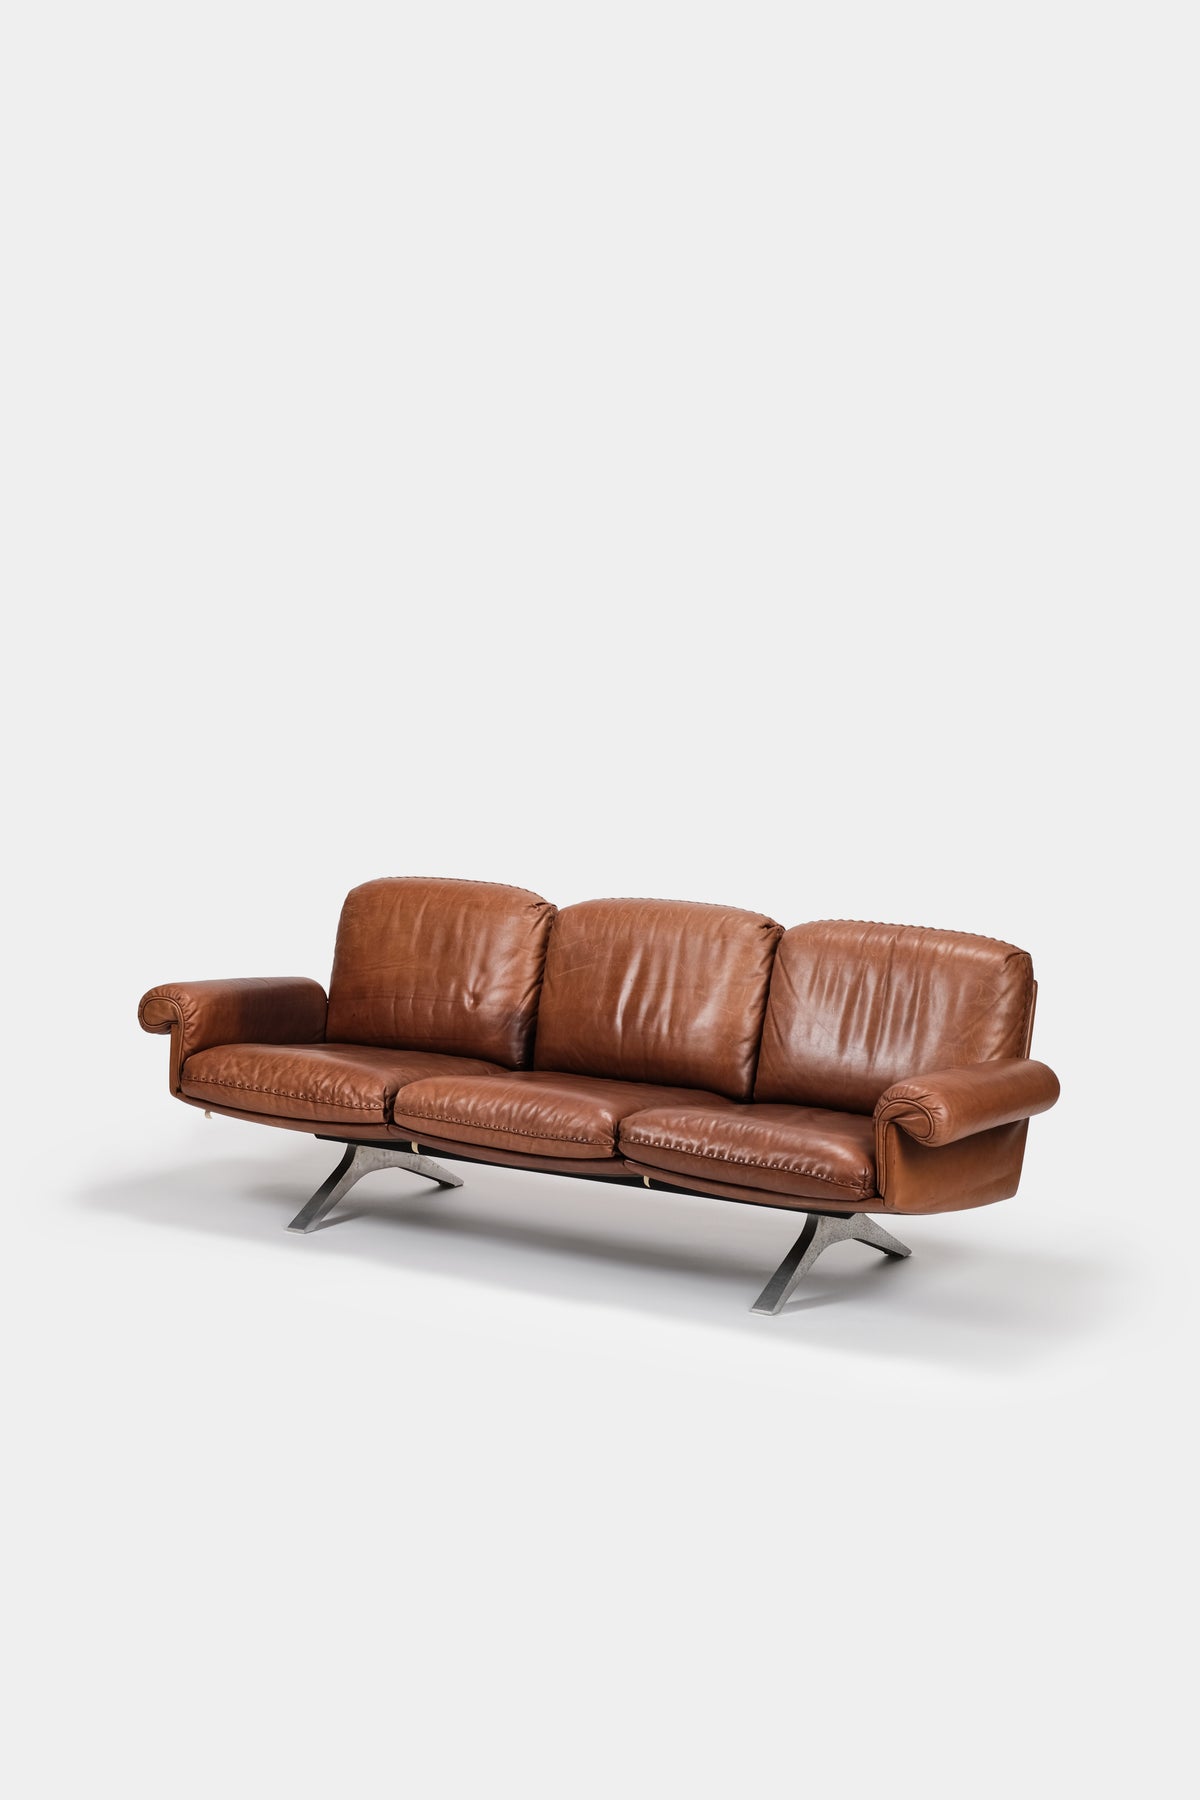 Sofa Model SD -31, De Sede, 60s